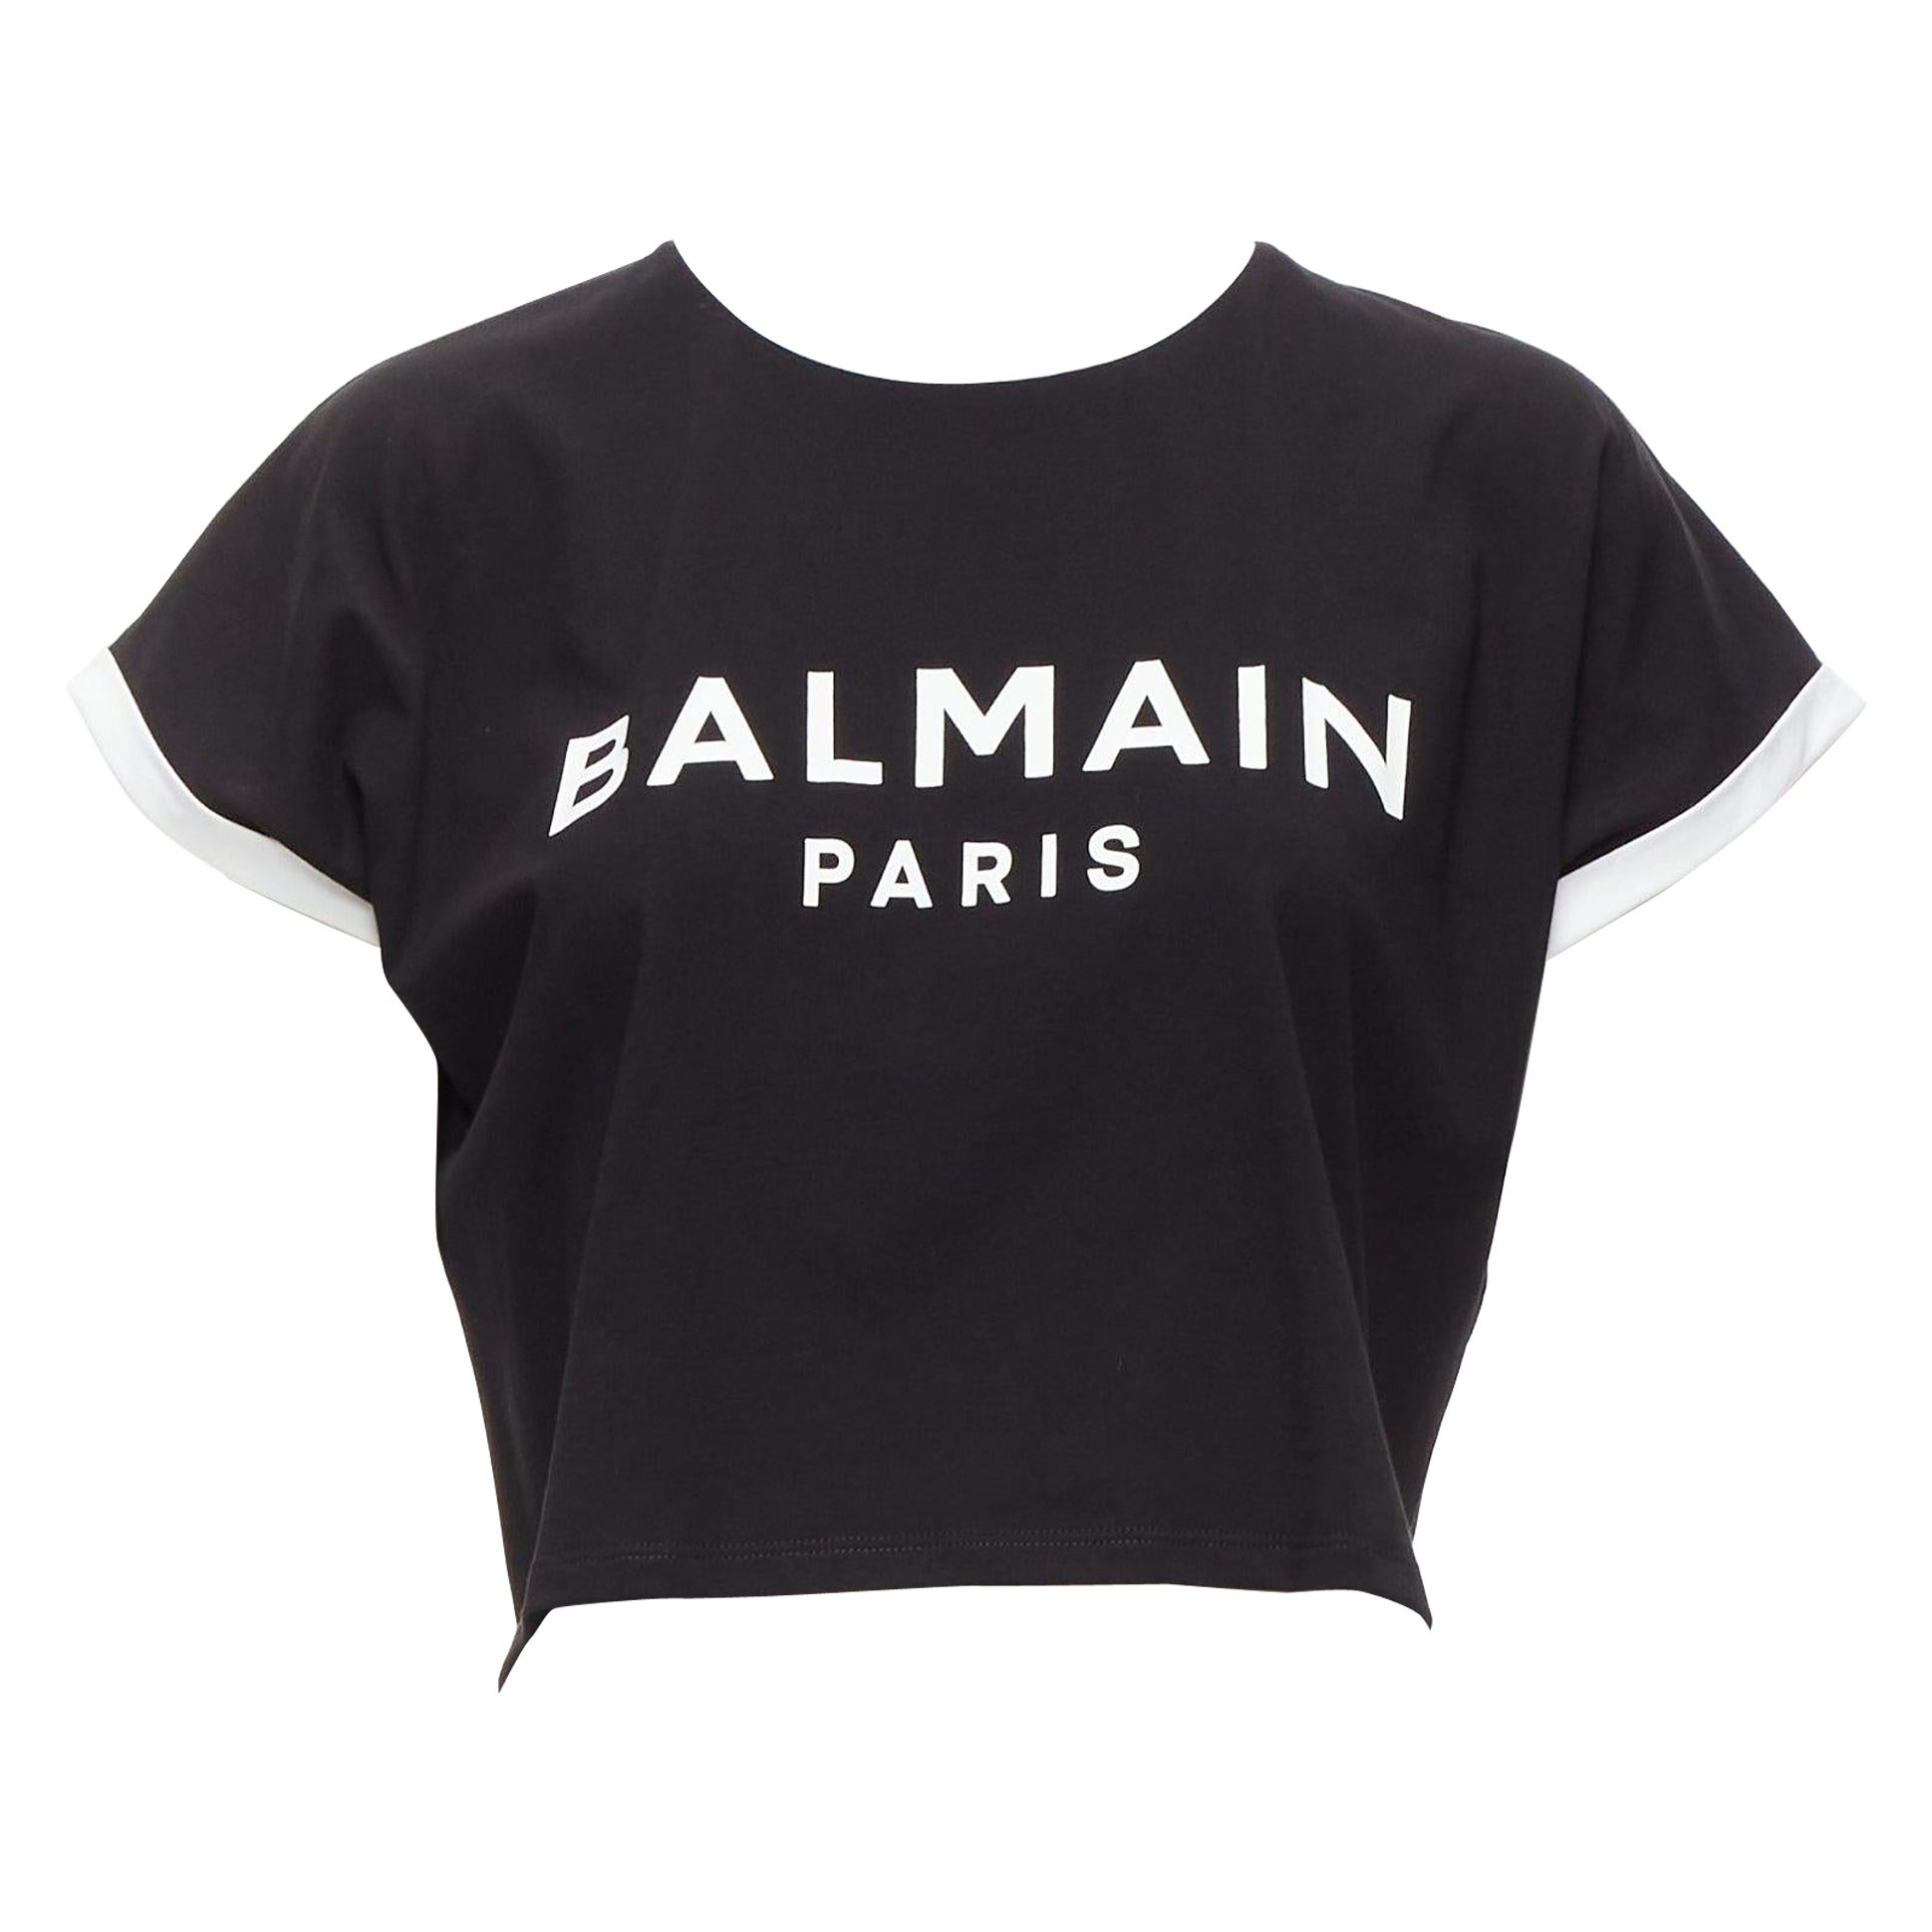 How do I spot a fake Balmain T-shirt?